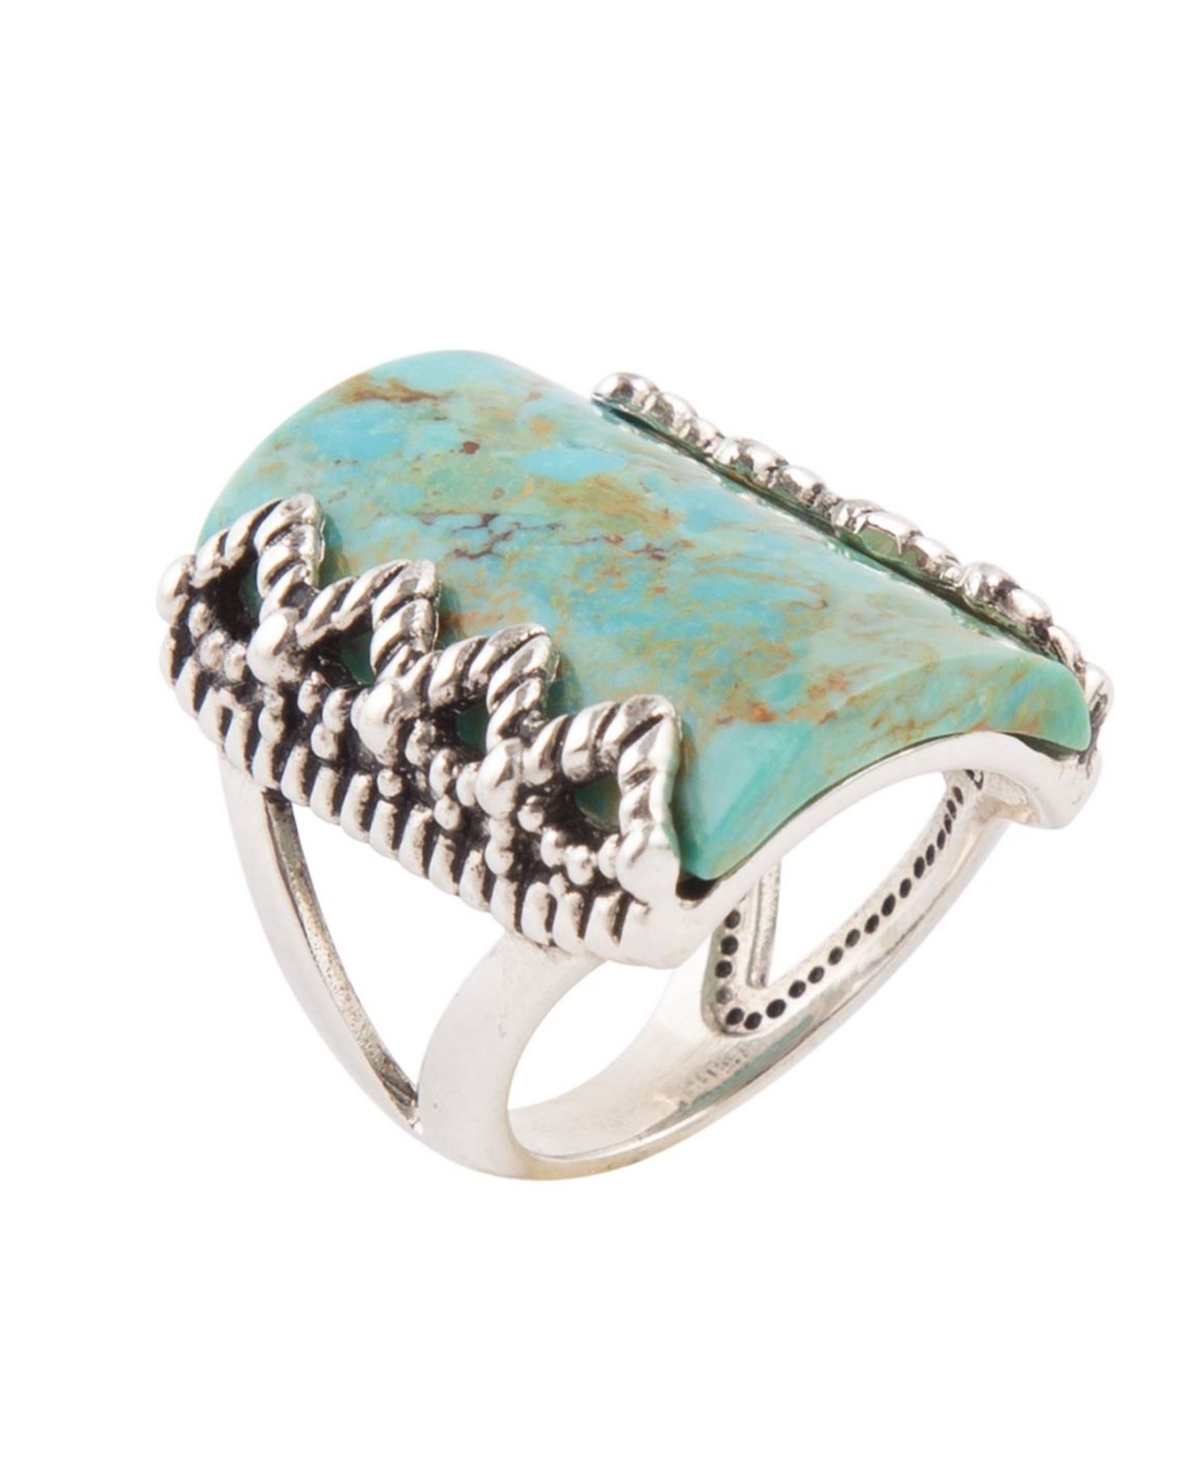 Bazaar Statement Ring - Turquoise